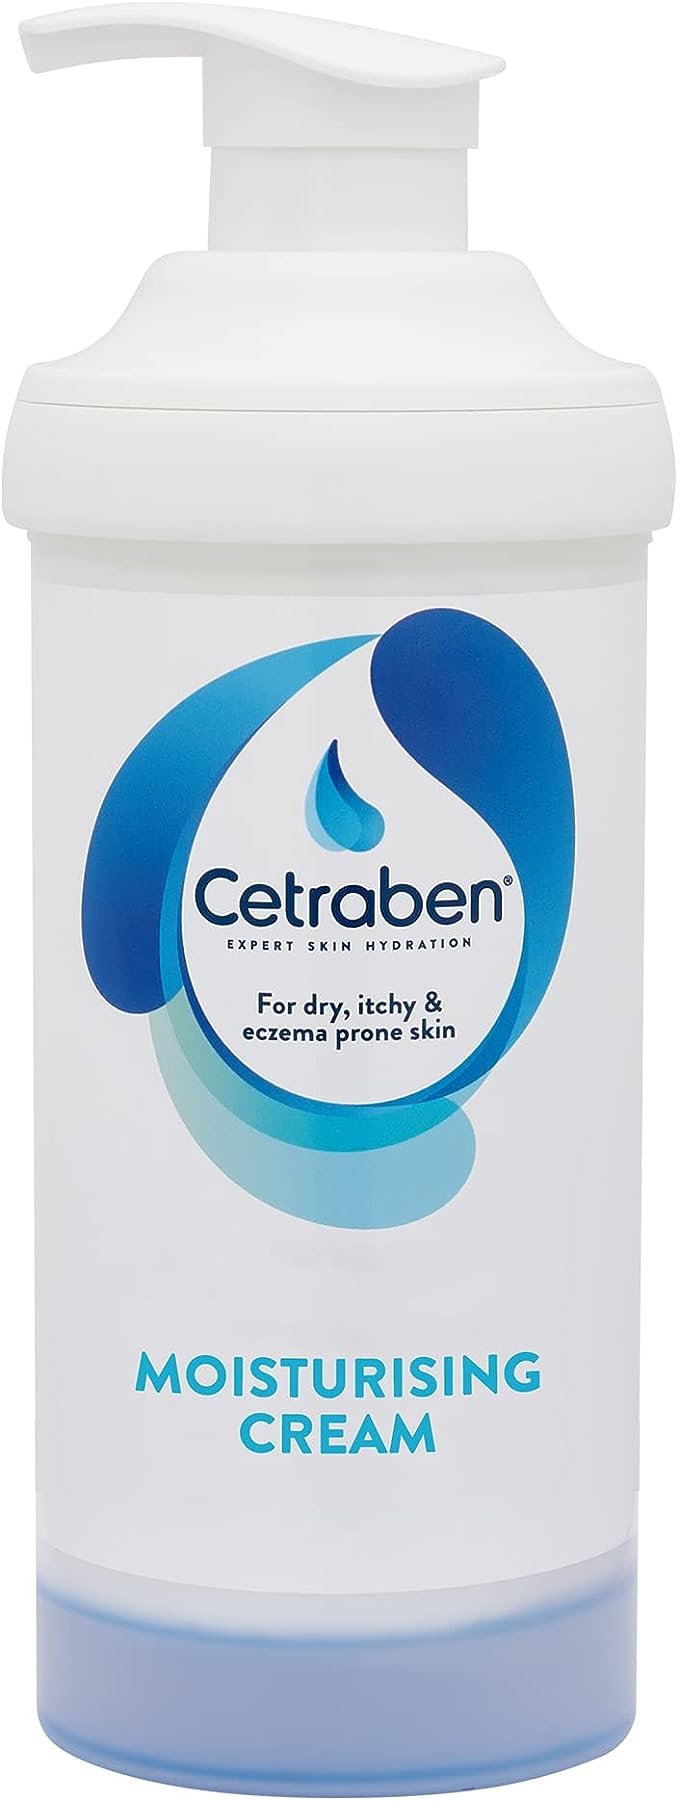 Cetraben Body Cream Moisturiser Perfect For Dry Sensitive Skin